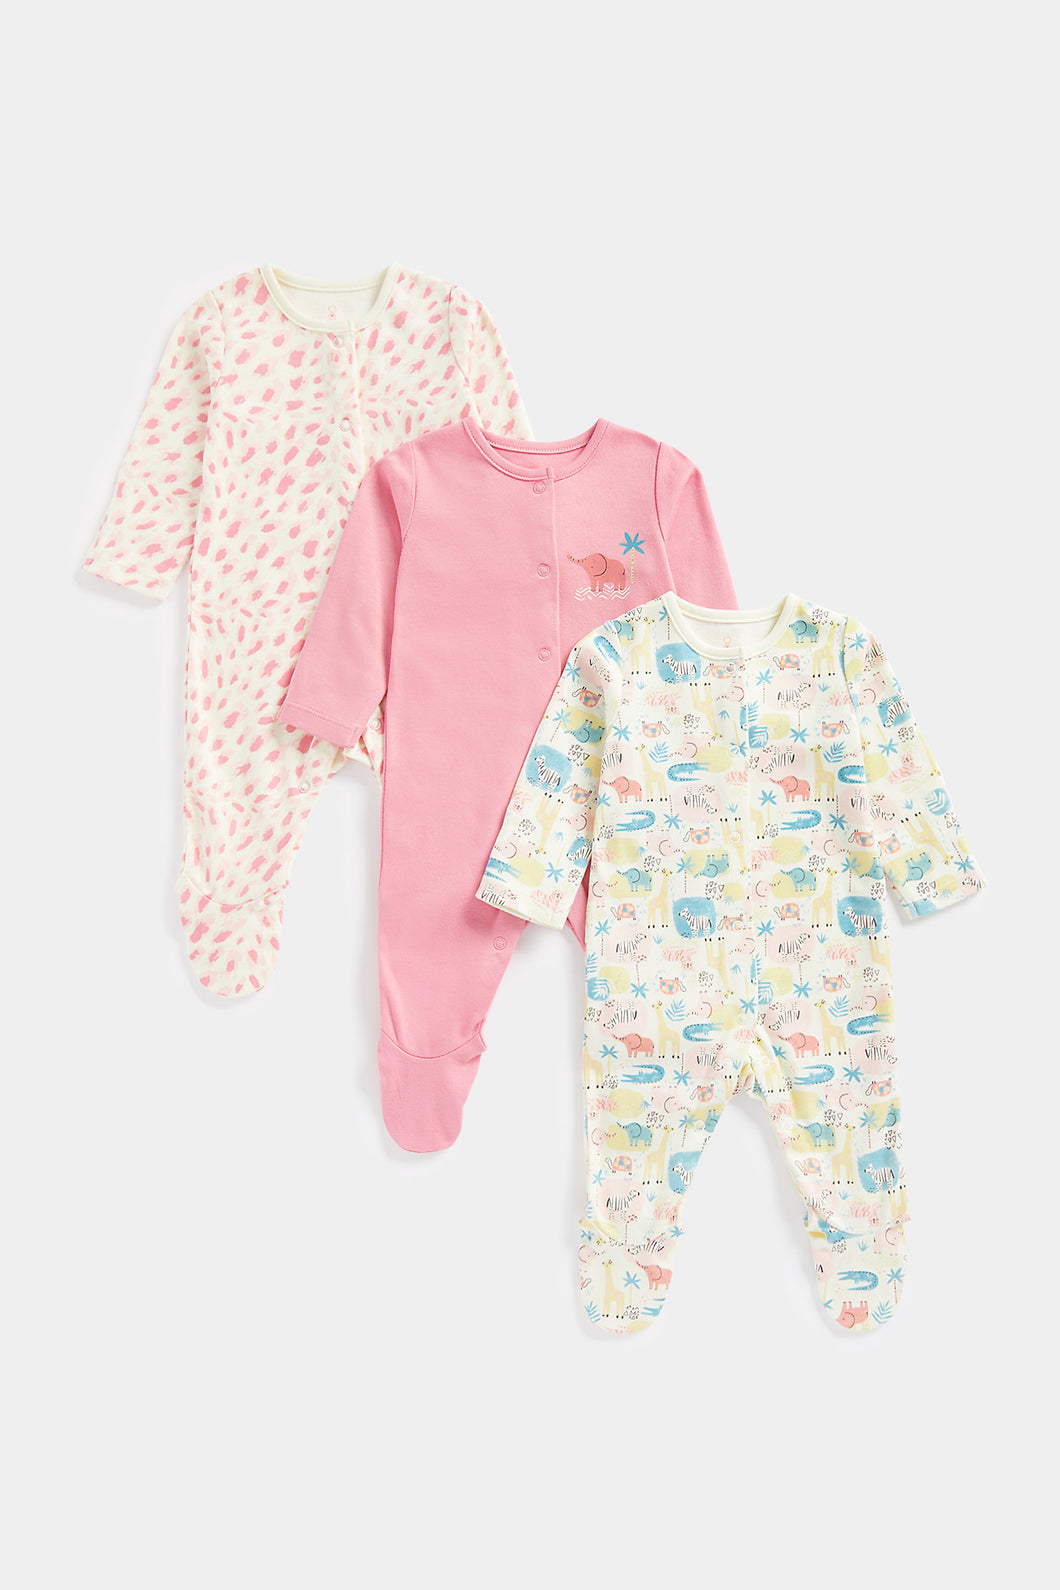 Mothercare Safari Sleepsuits - 3 Pack